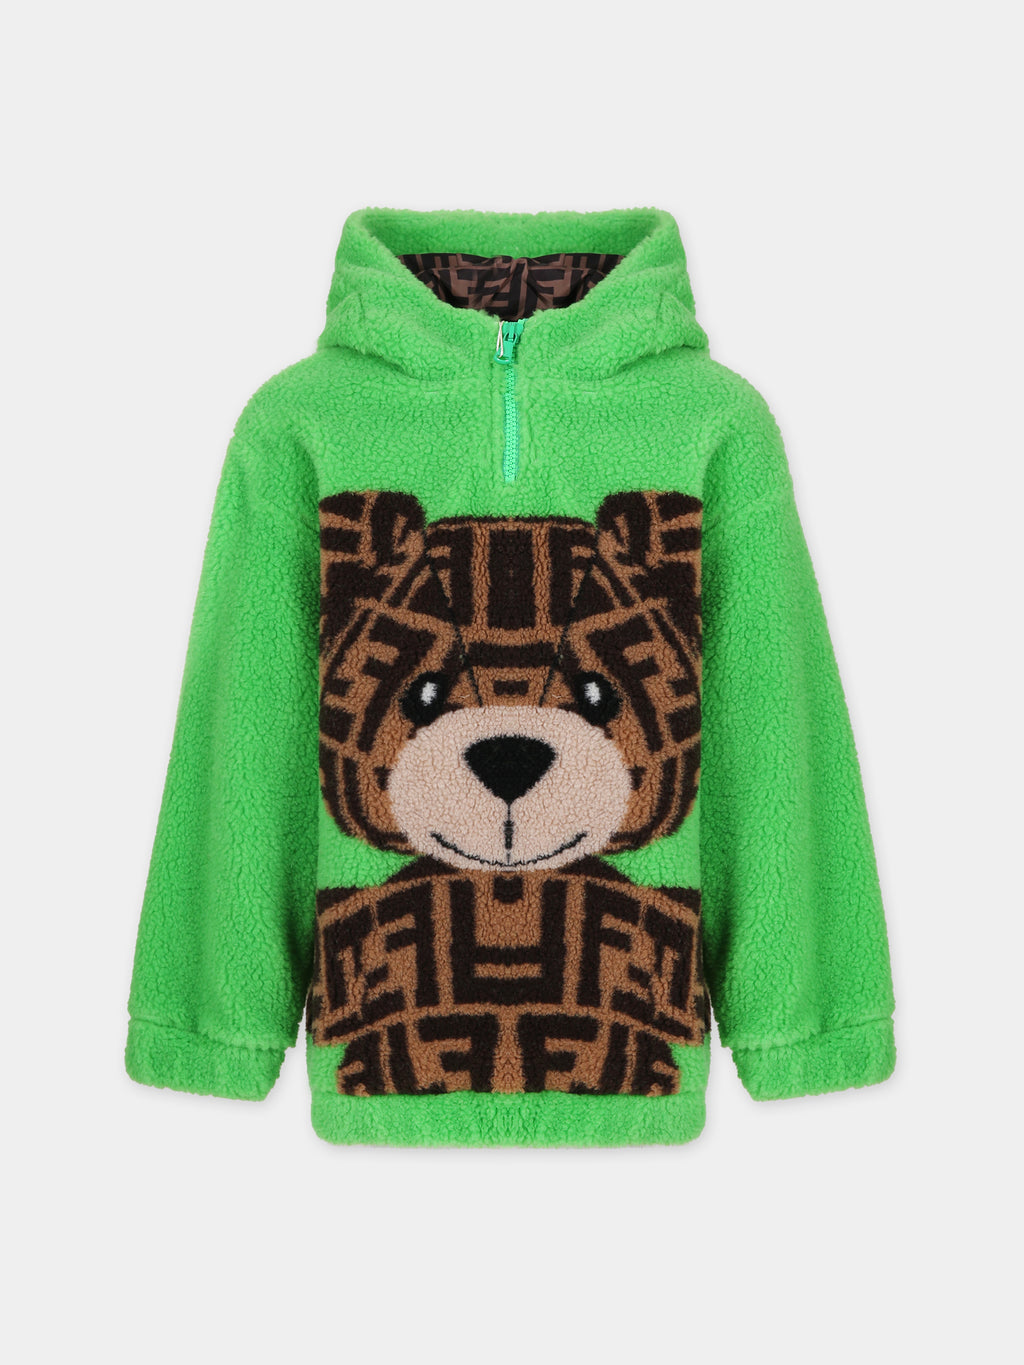 Green sweatshirt for kids with bear